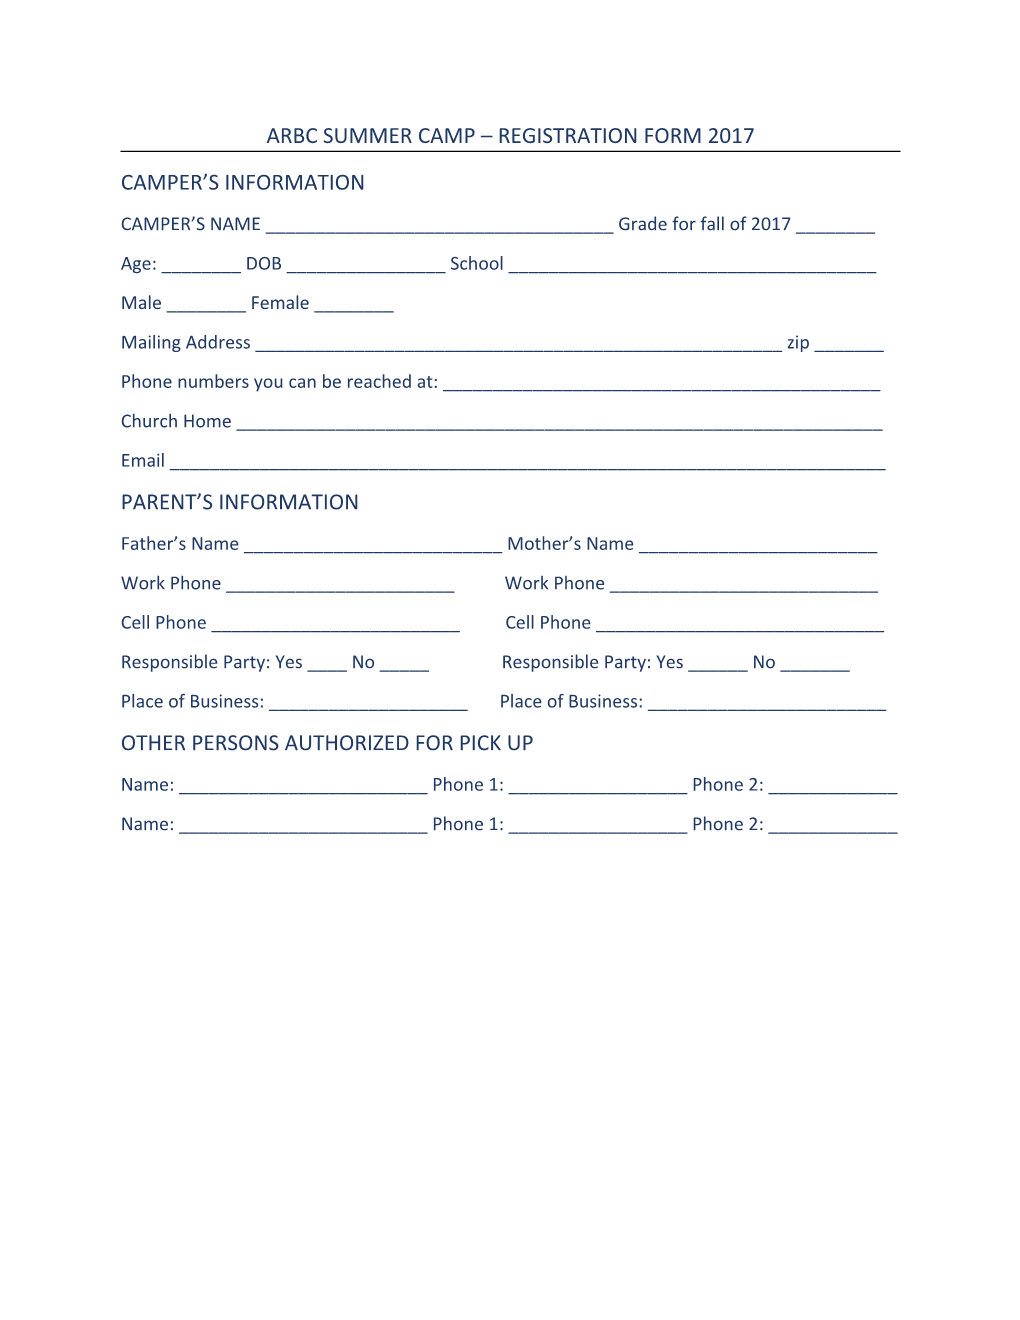 Arbc Summer Camp Registration Form 2017